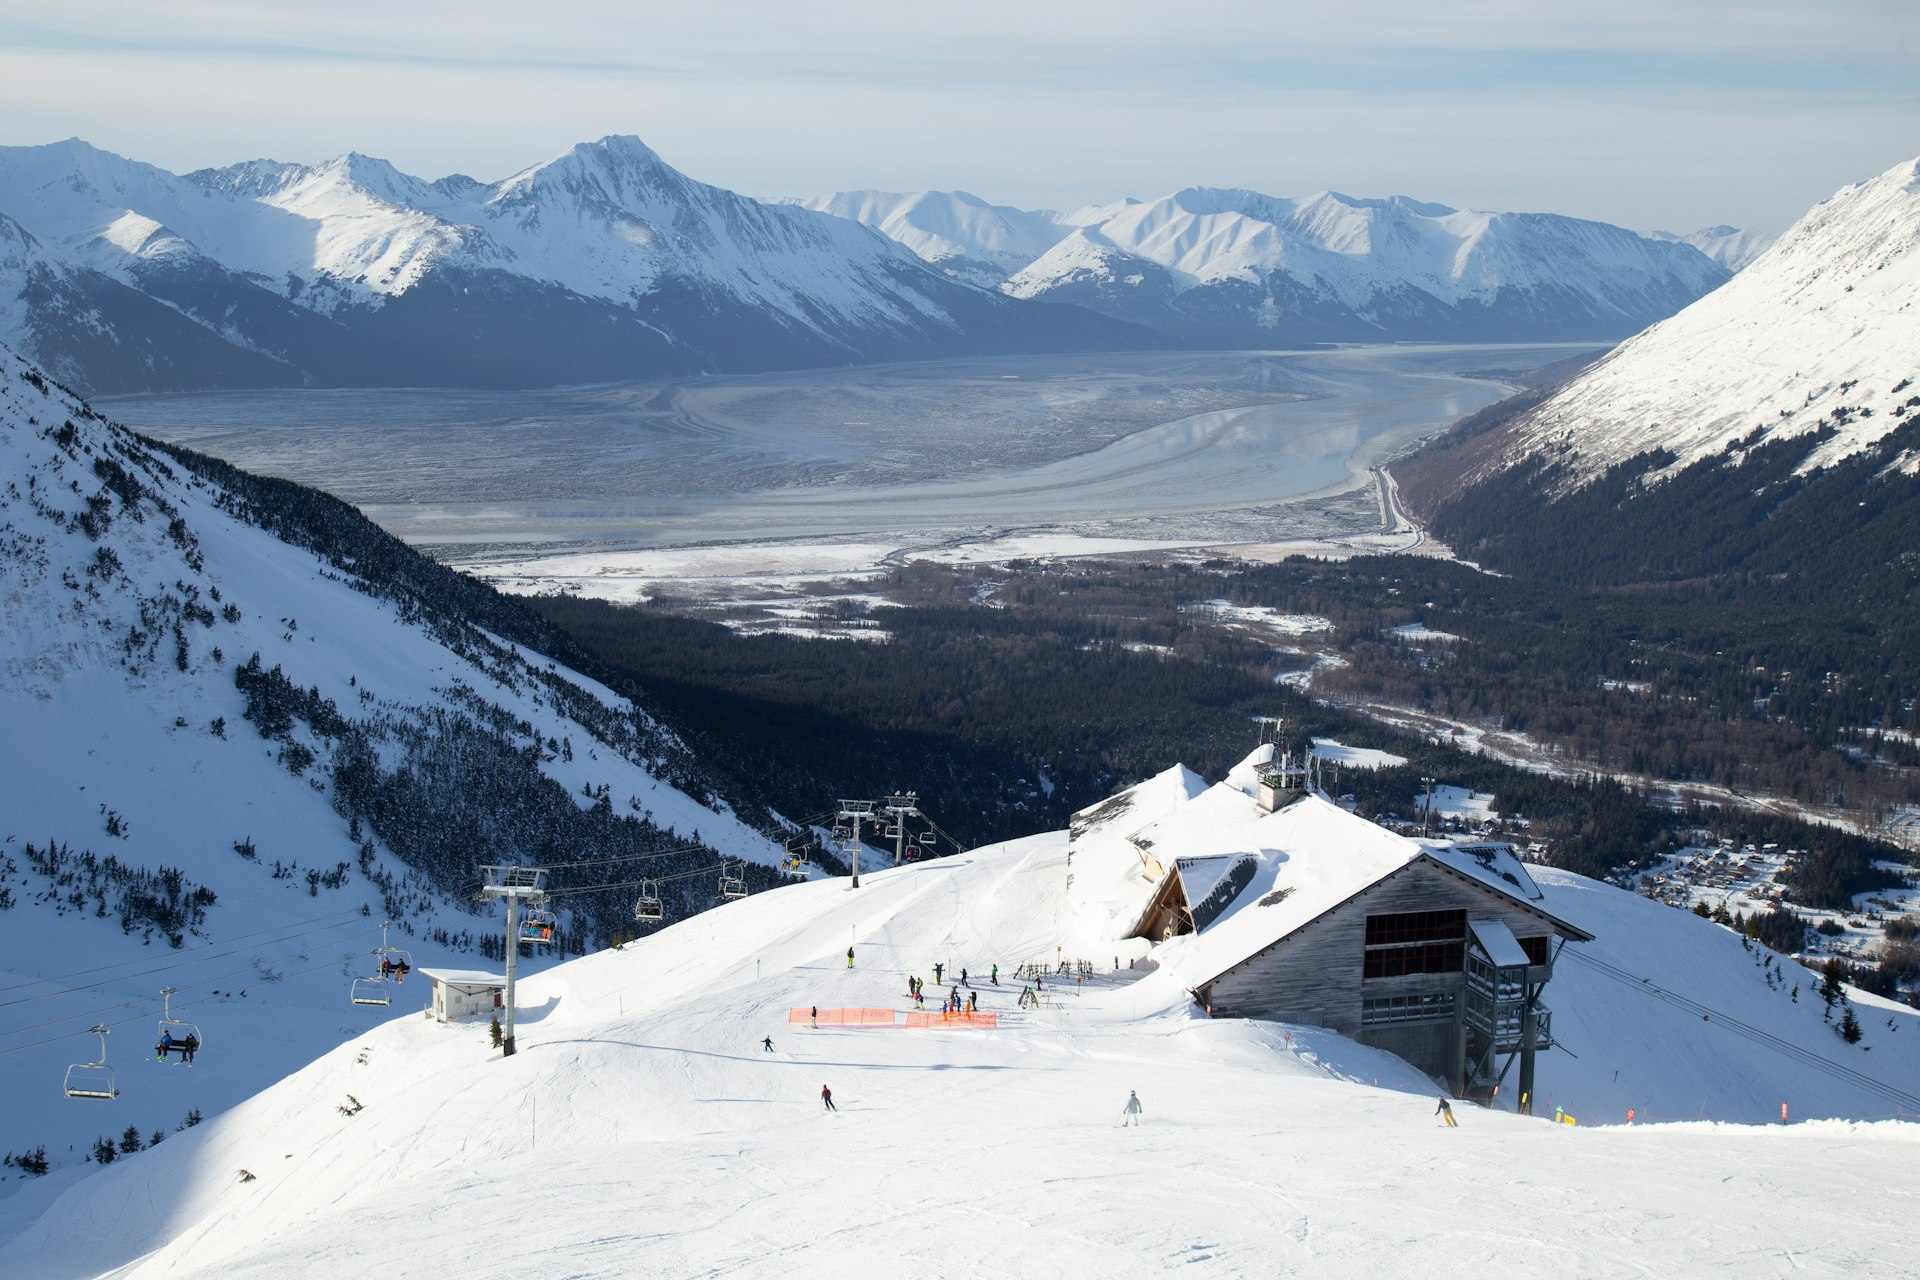 Ski slop at Alyeska Resort in Girdwood, Alaska